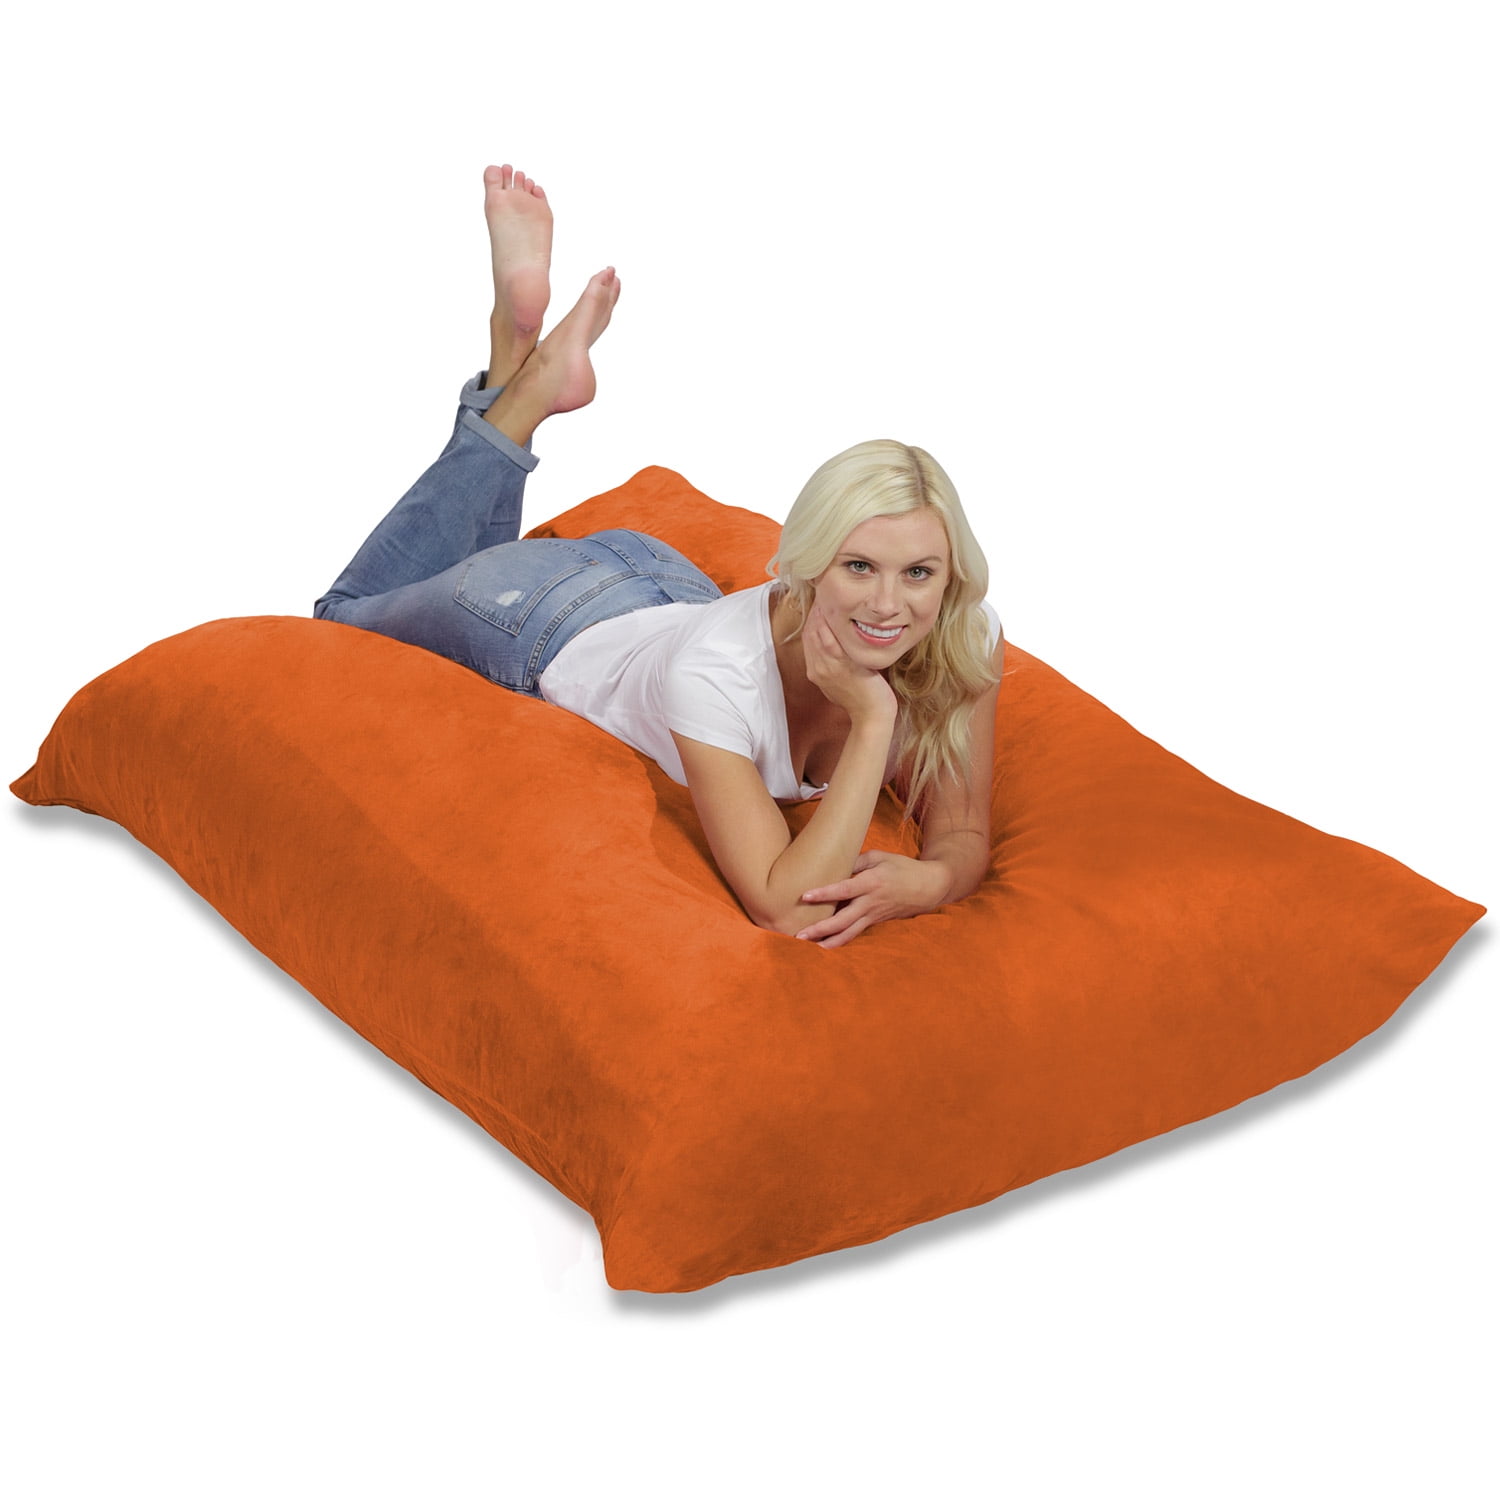 Non-woven Fabric Throw Pillow Inserts Memory Rebound Chair Sofa